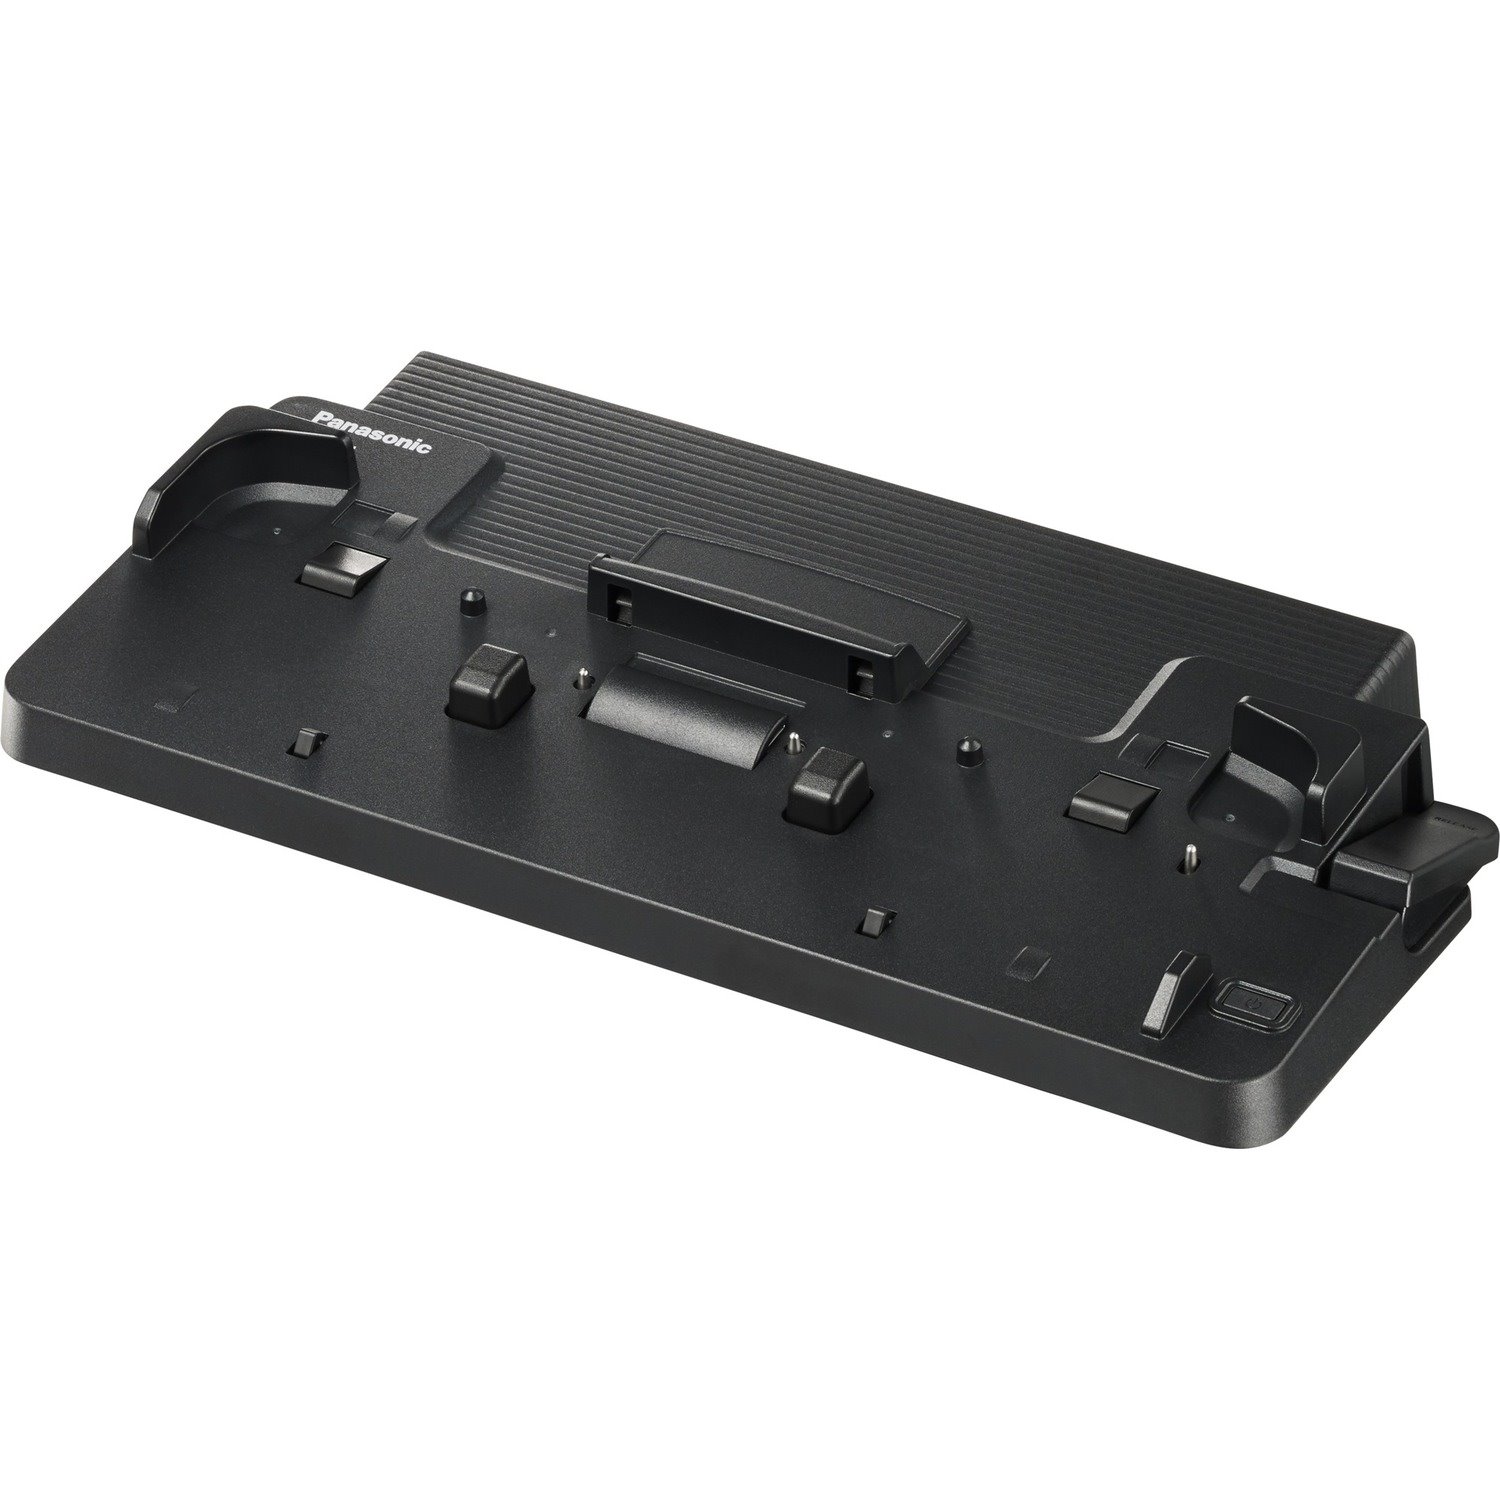 Panasonic CF-VEB331U Port Replicator for Notebook - USB Type C